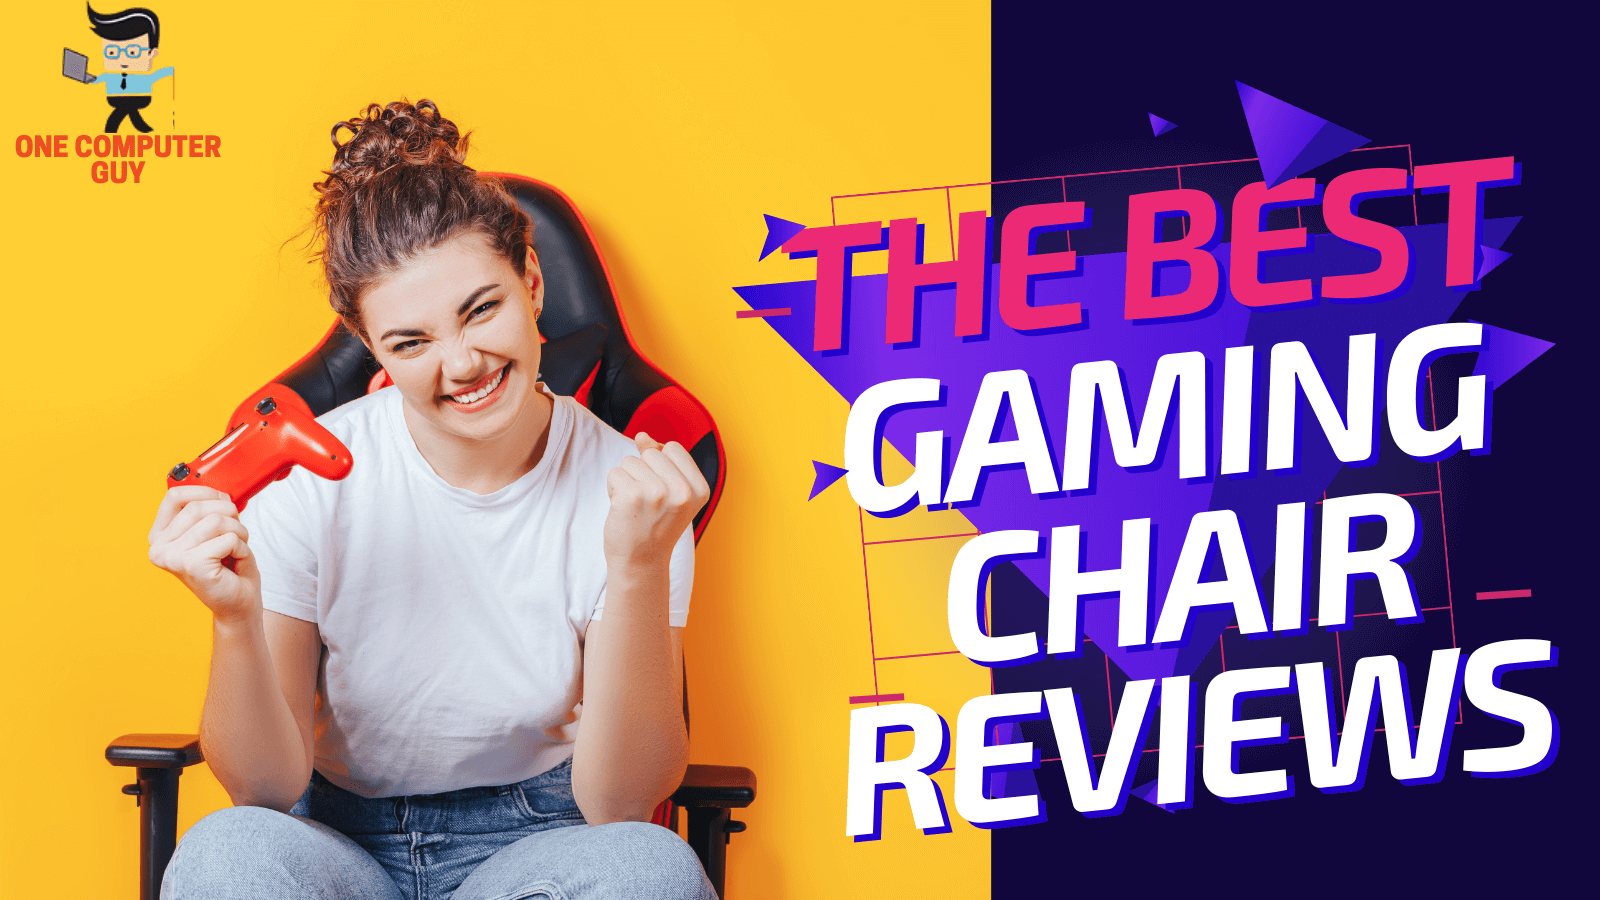 Gaming chair reviews